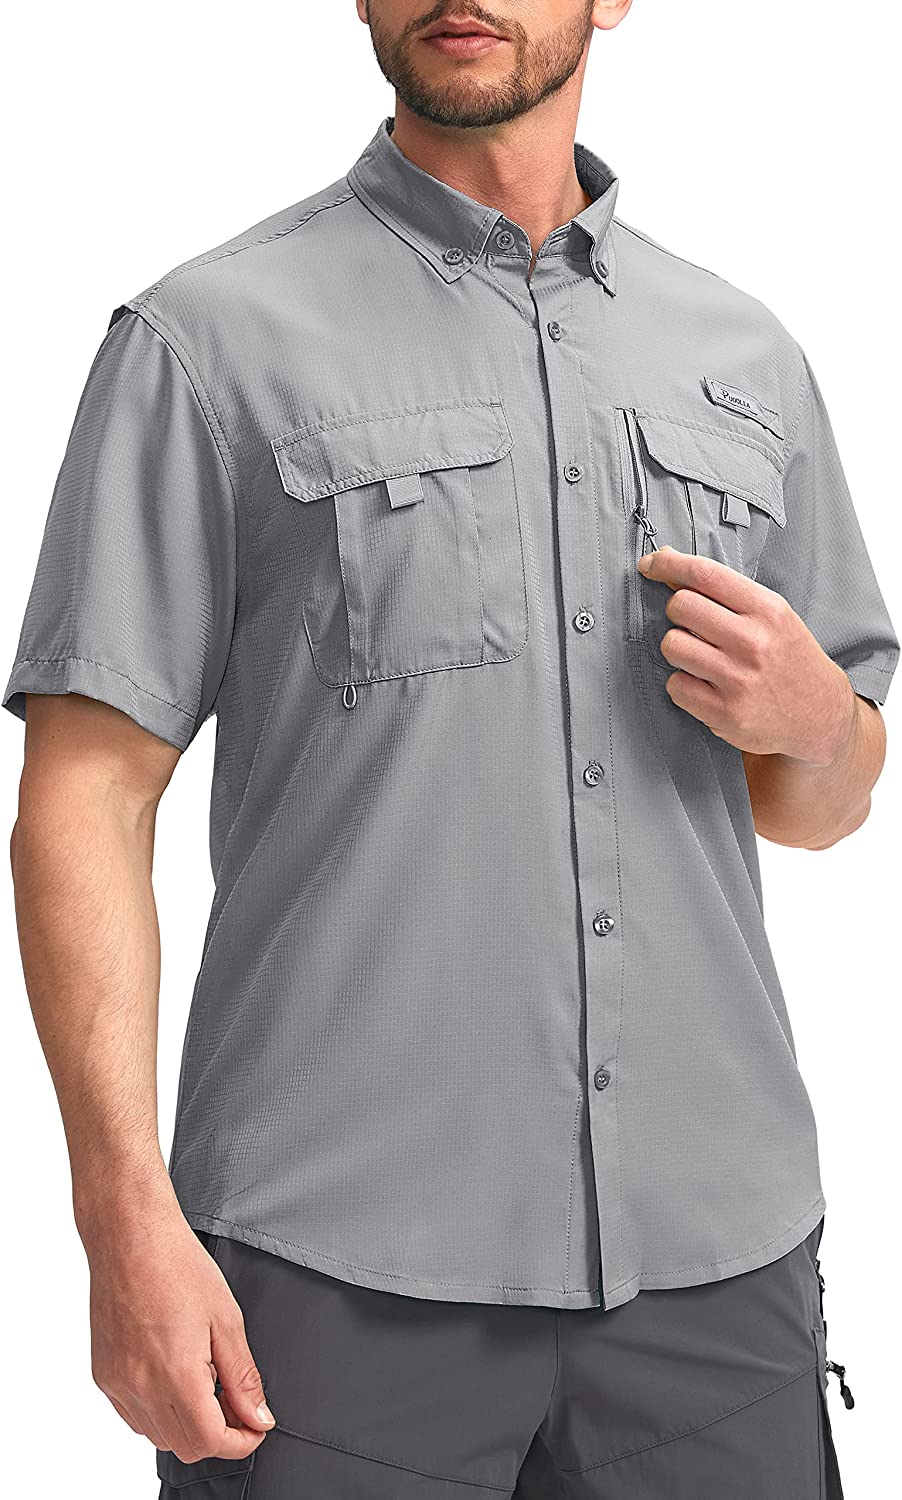 Buy Pudolla Men's Fishing Shirts Short Sleeve Travel Work Shirts